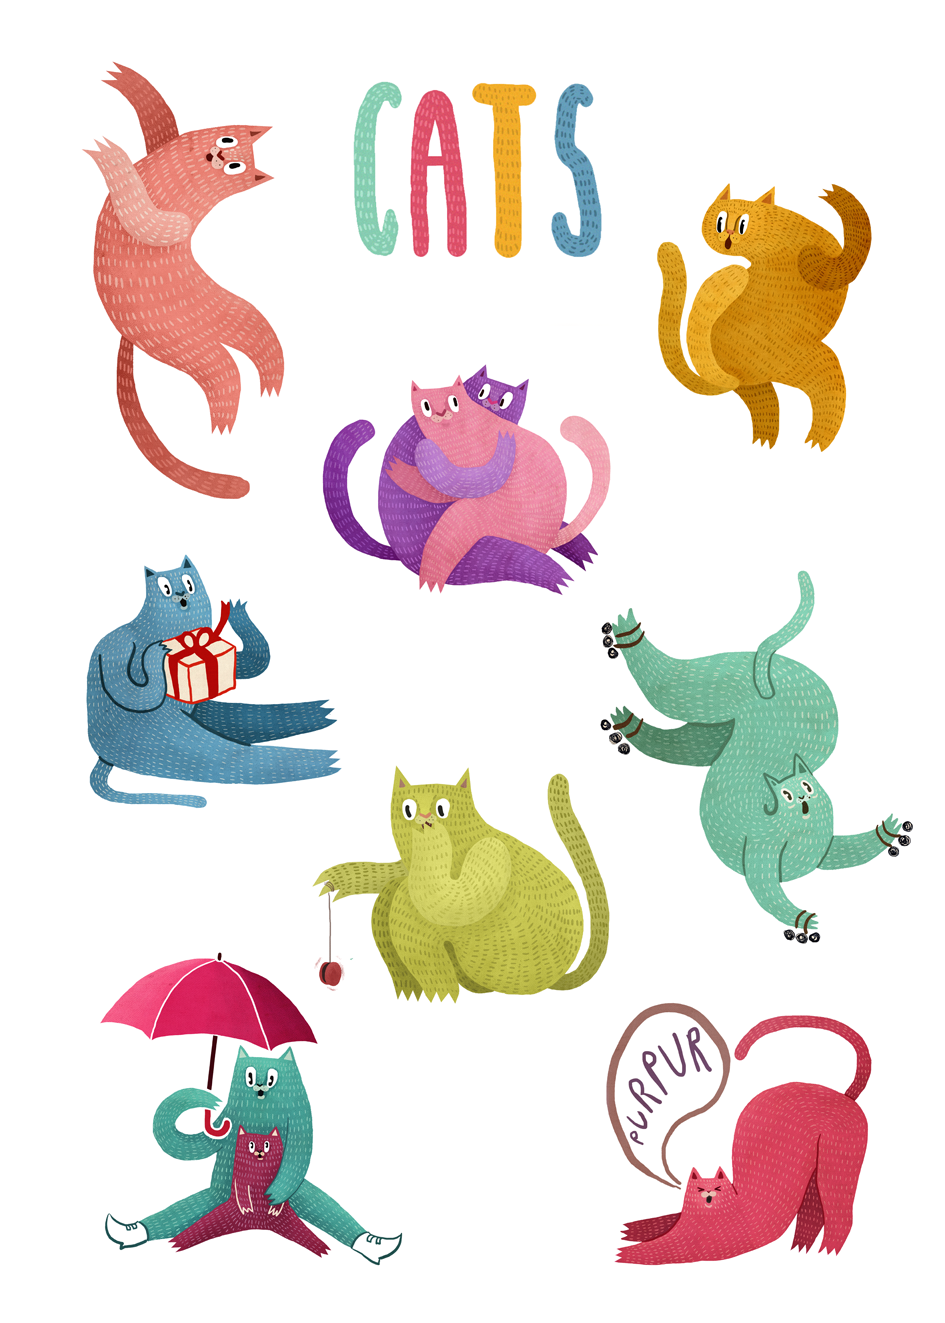 cats funny illustrations children books characters art made animals Purpurlove sweet laziness kazikova